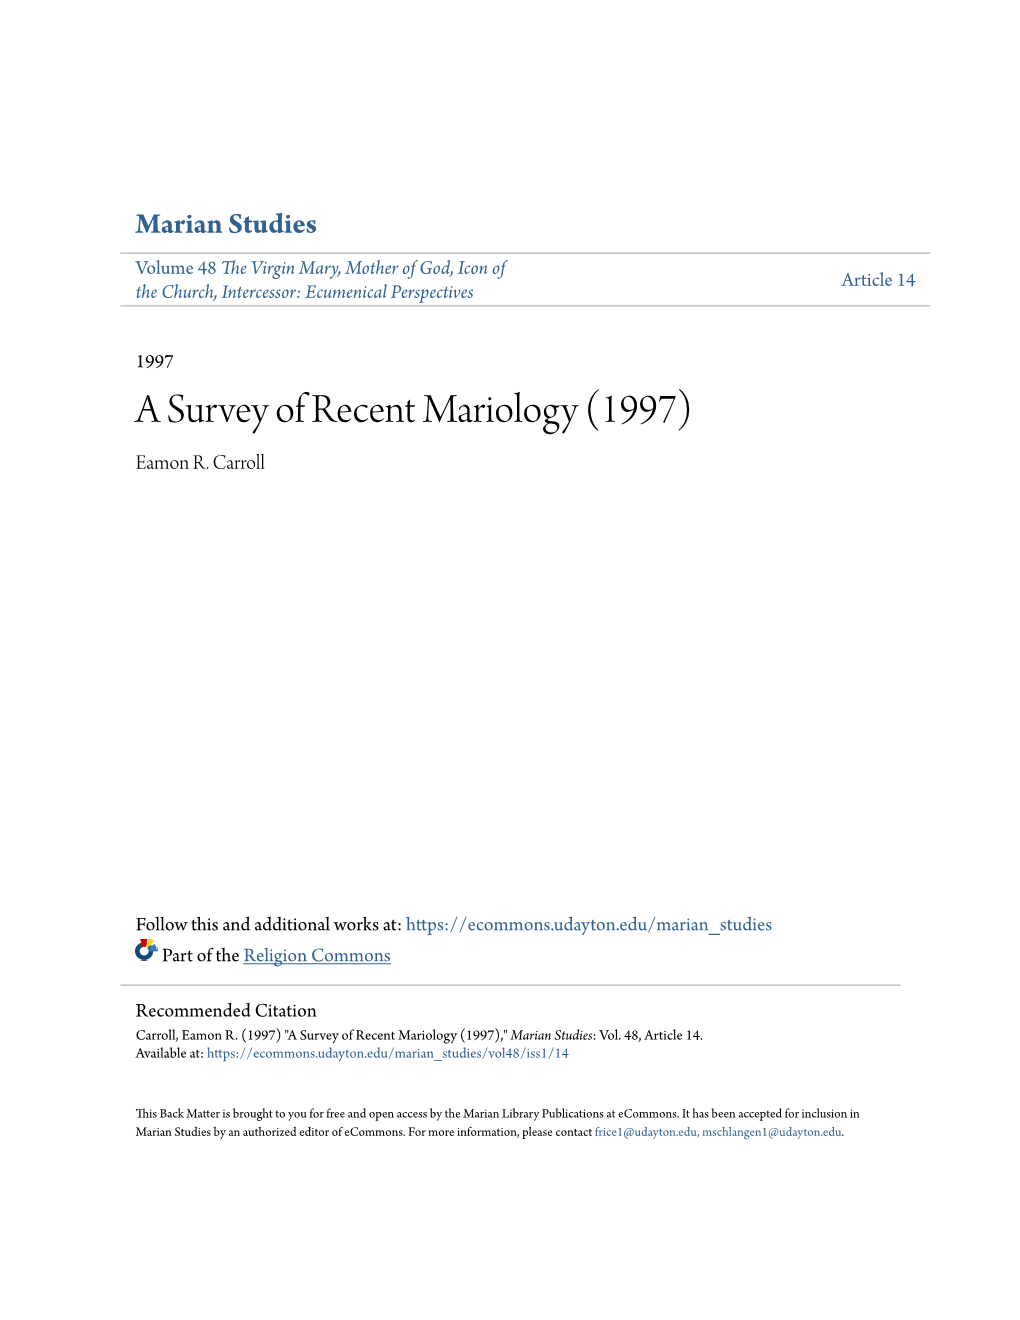 A Survey of Recent Mariology (1997) Eamon R